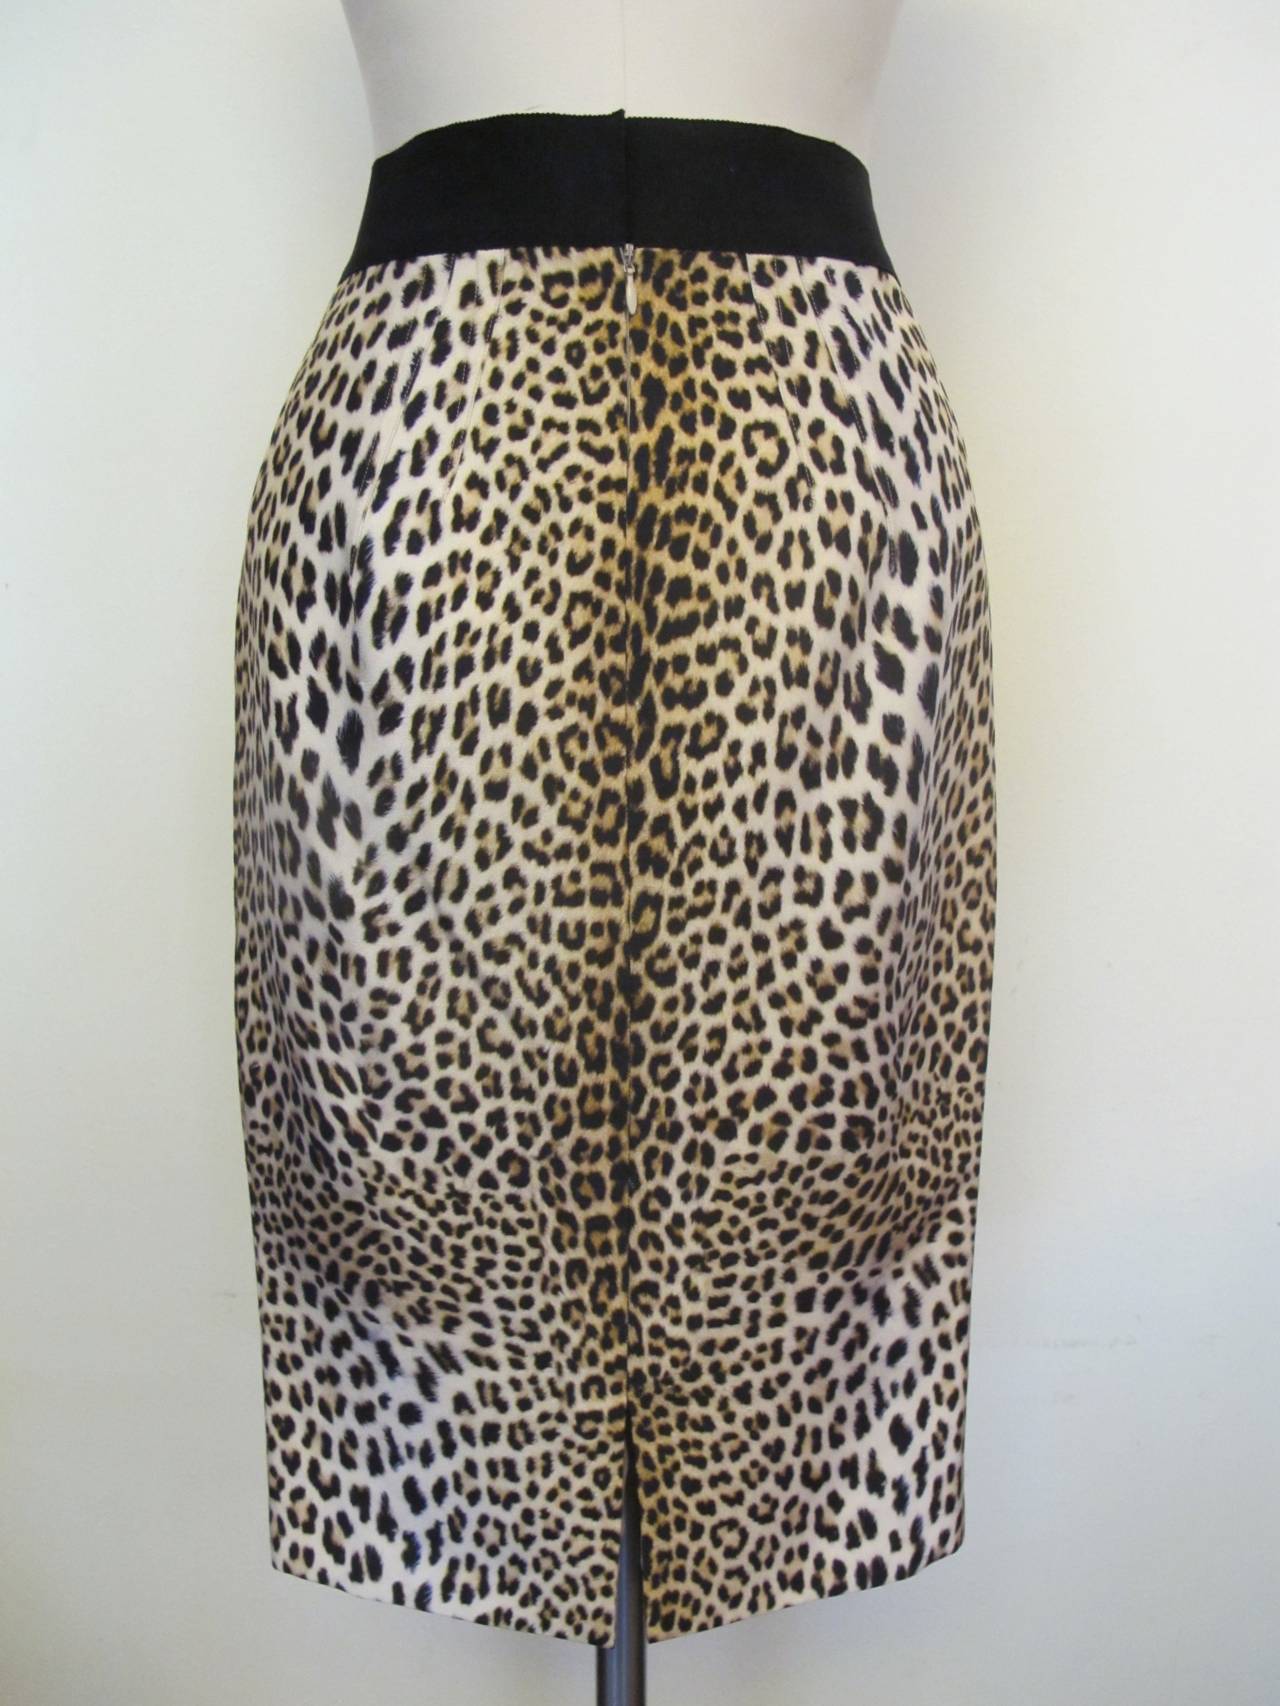 Giambattista Valli Silk Leopard Pencil Skirt In Excellent Condition For Sale In San Francisco, CA